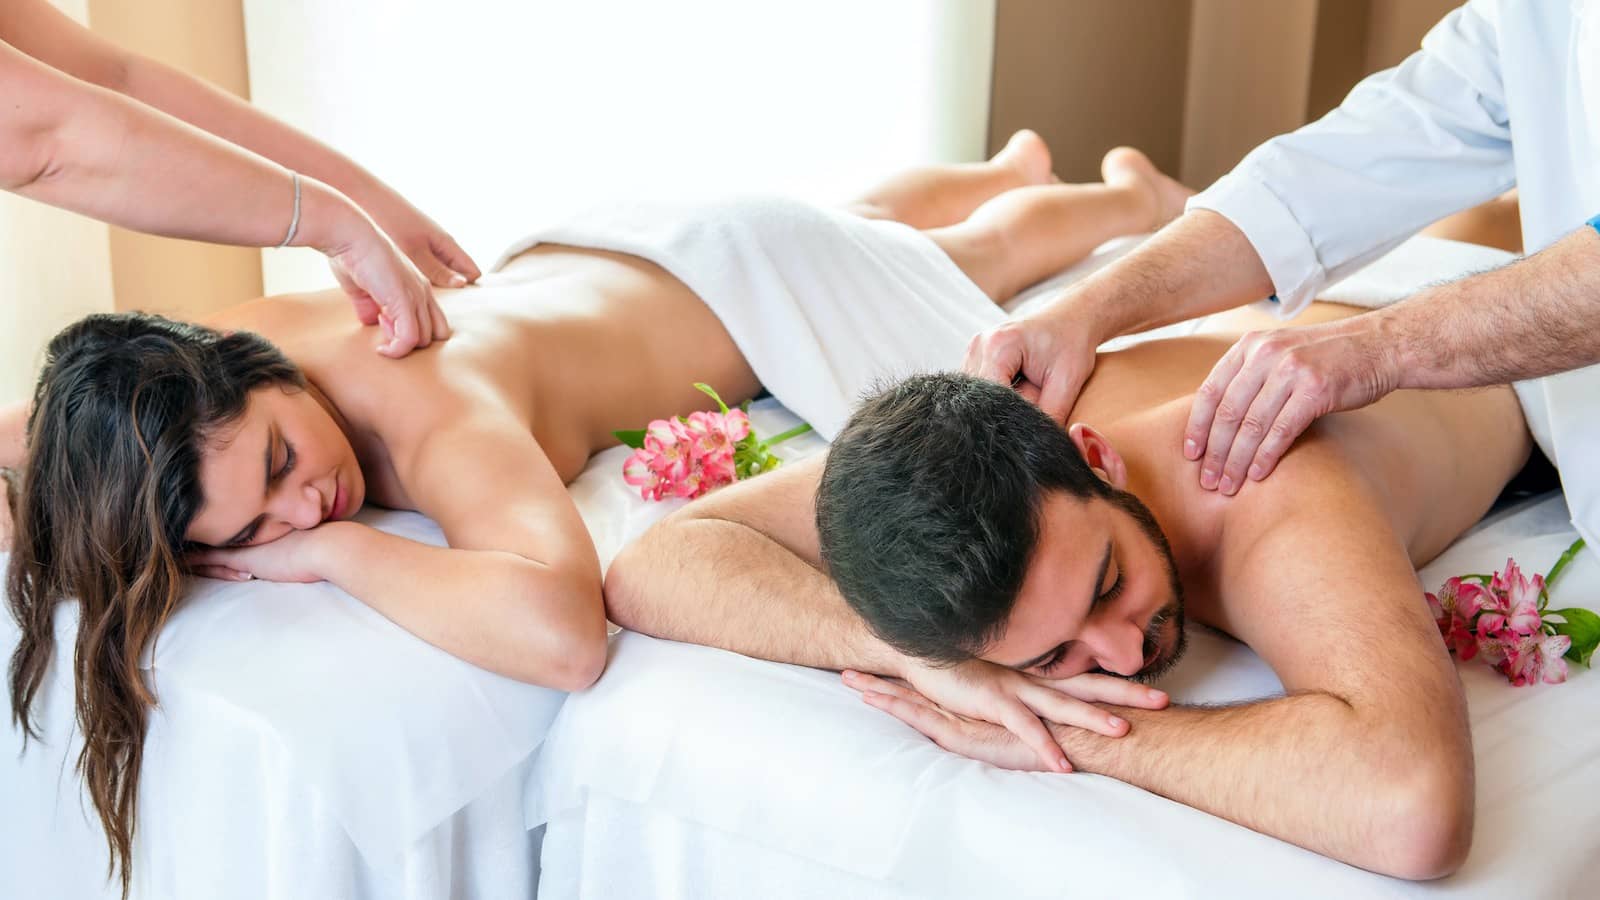 erotic couples massage